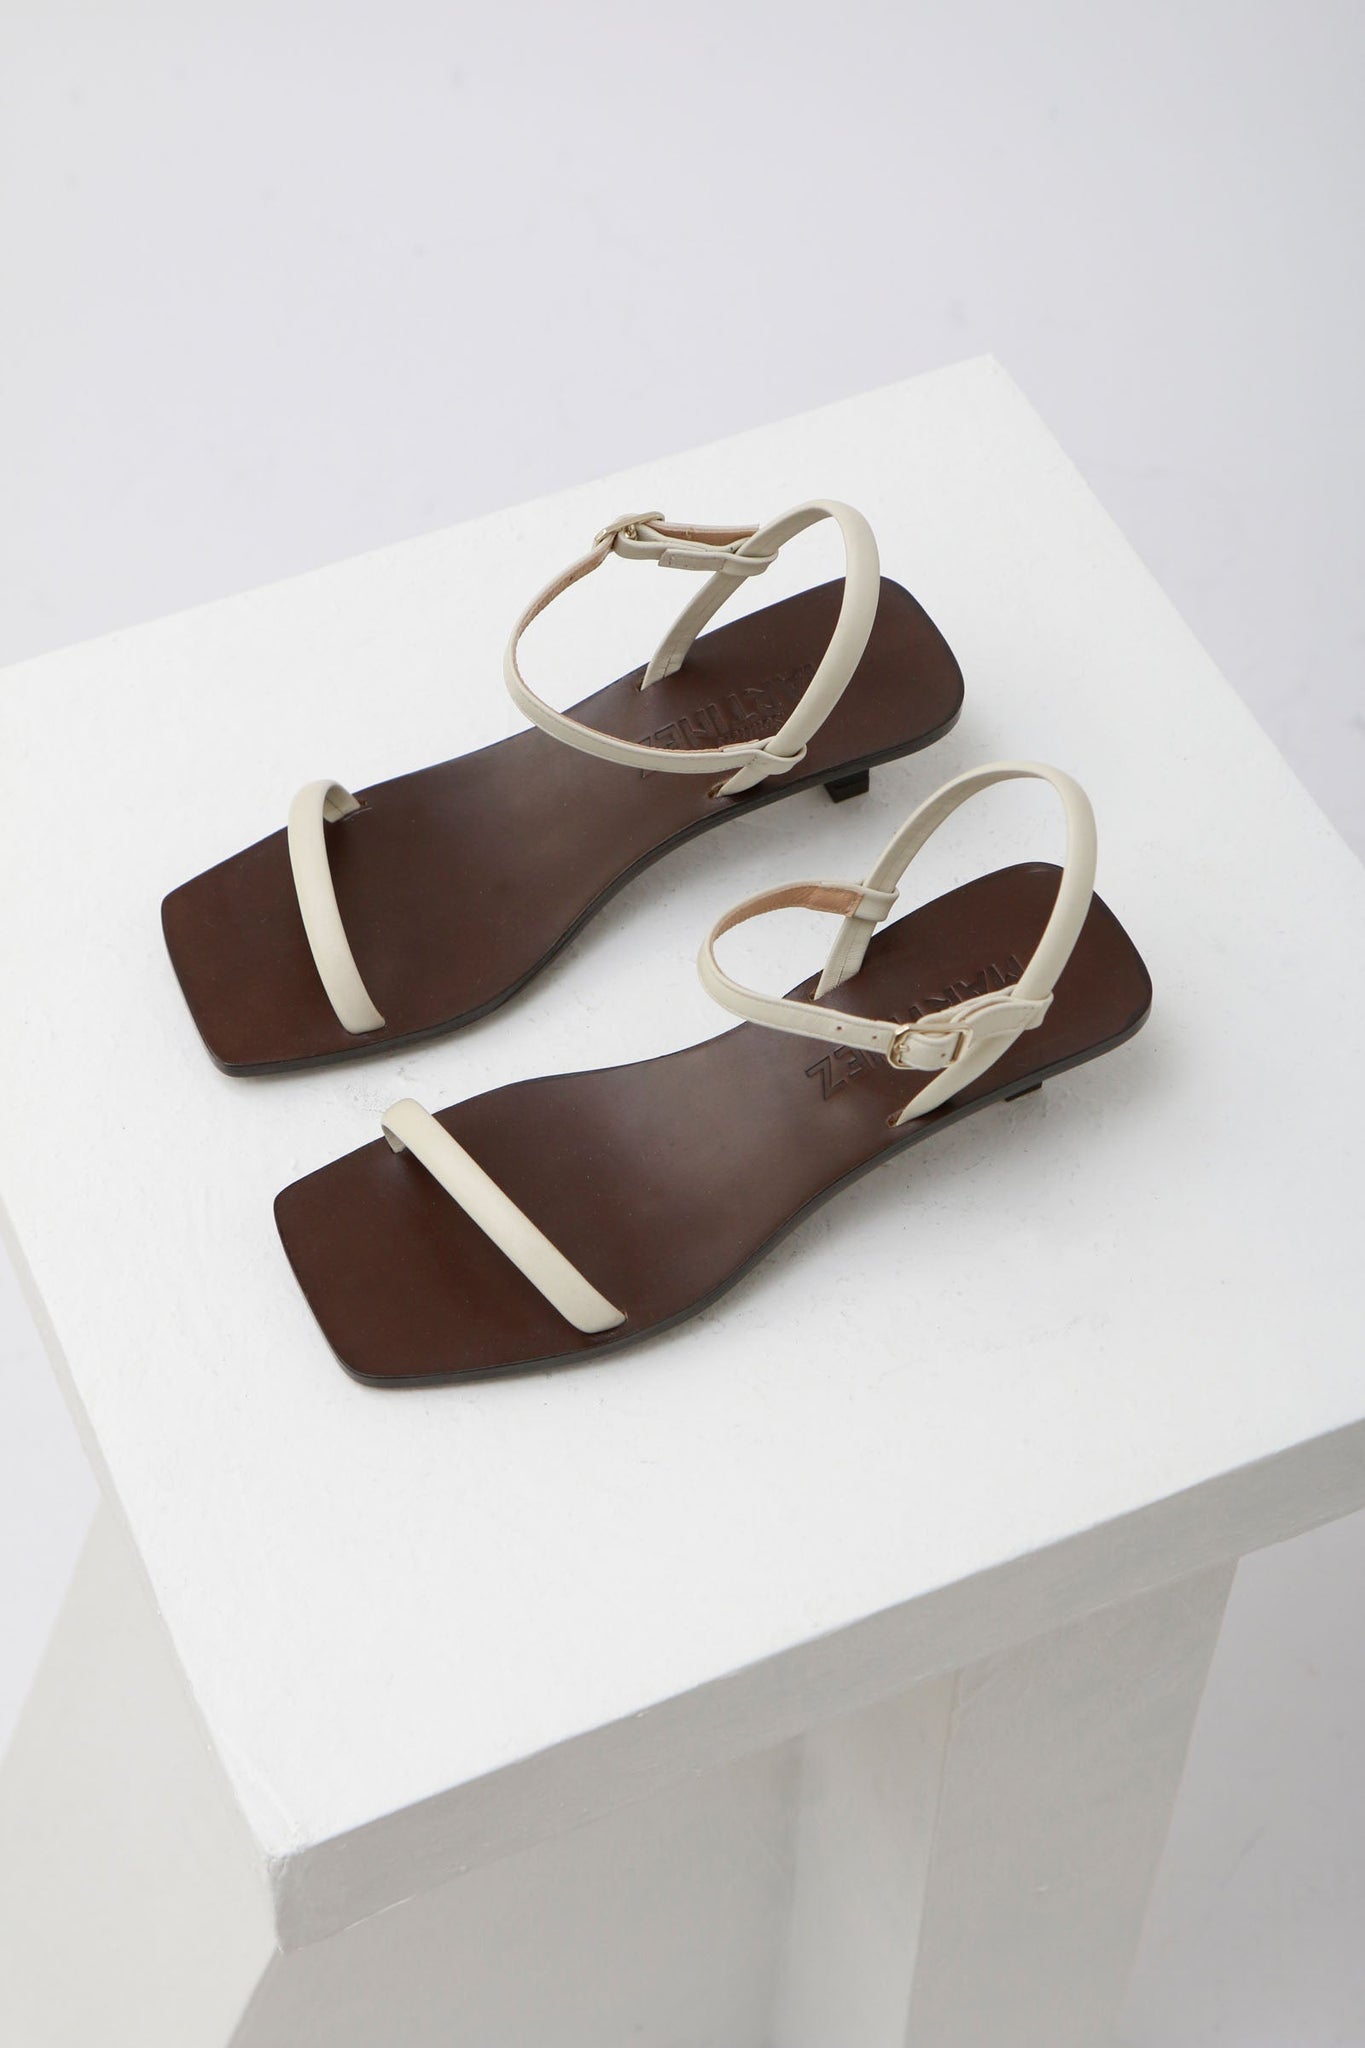 Souliers Martinez Shoes RIVERA - White Leather Sandals 